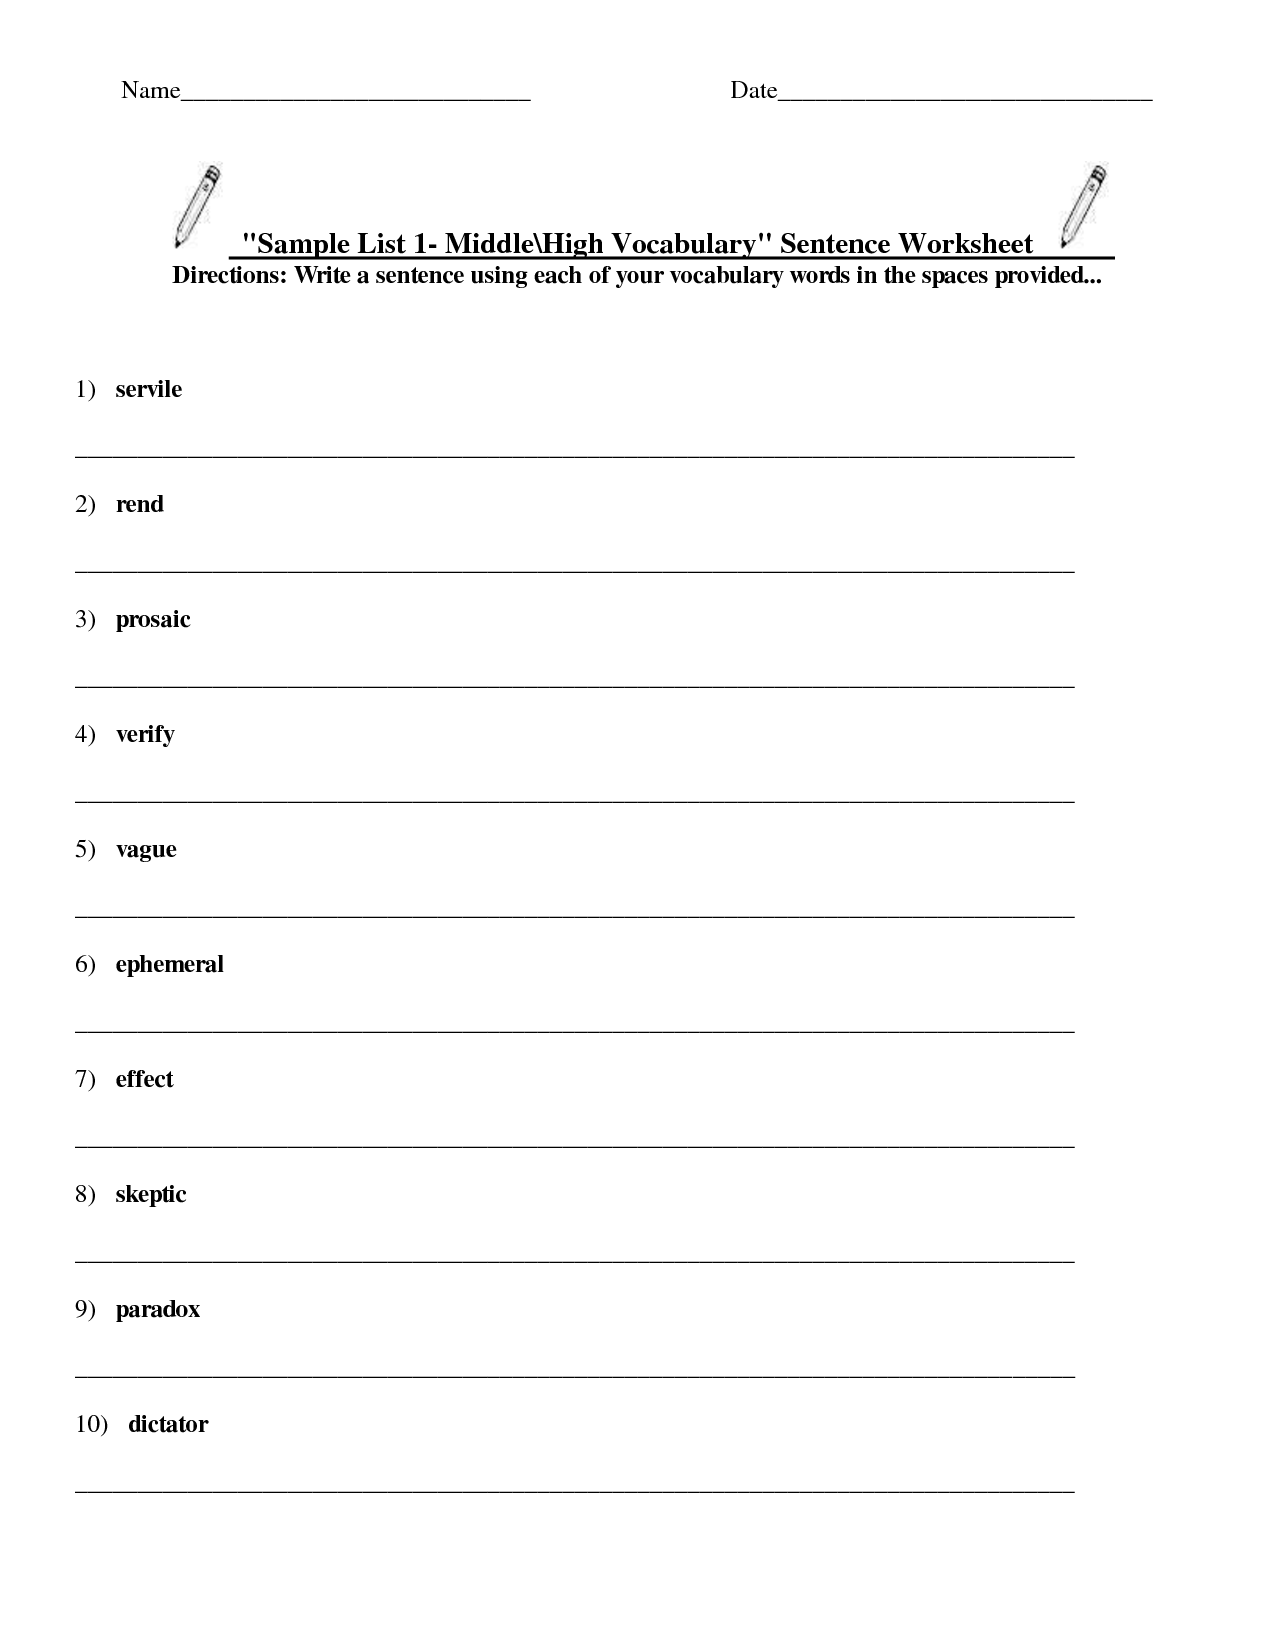 free-language-grammar-worksheets-and-printouts-free-printable-grammar-worksheets-for-2nd-grade